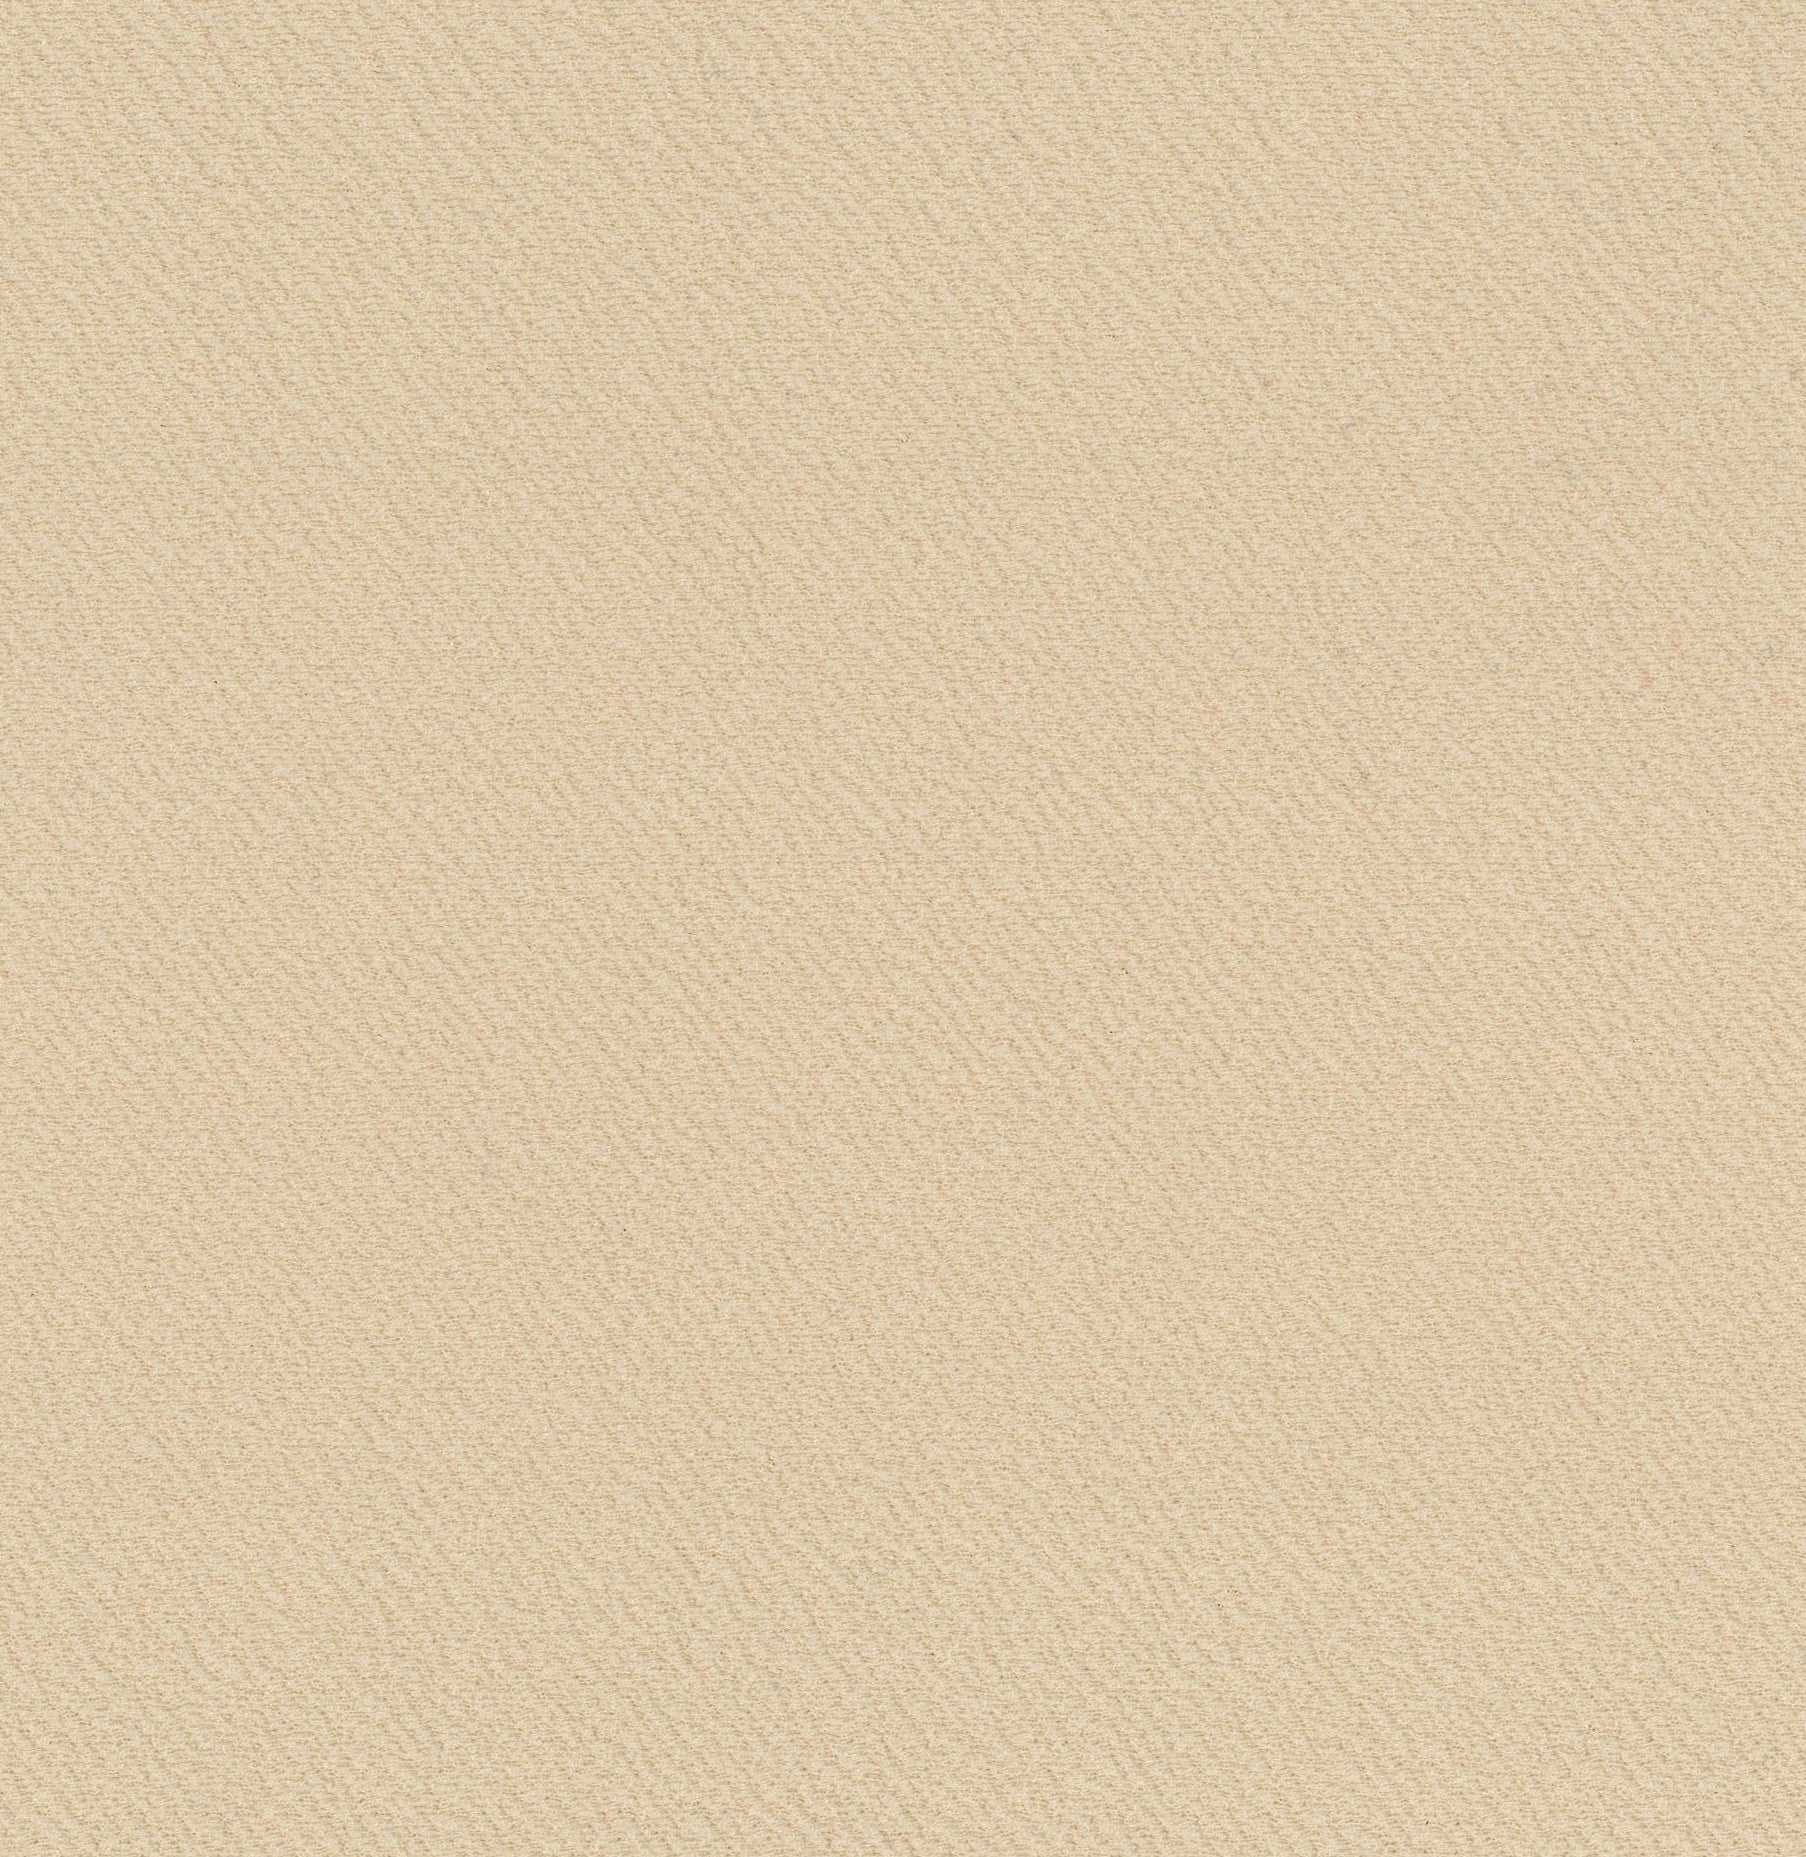 13018-08 Apricot White Riverpool Jacquard Plain Dyed Blend 260g/yd 58" beige blend jacquard knit plain dyed polyester spandex Solid Color, Jacquard - knit fabric - woven fabric - fabric company - fabric wholesale - fabric b2b - fabric factory - high quality fabric - hong kong fabric - fabric hk - acetate fabric - cotton fabric - linen fabric - metallic fabric - nylon fabric - polyester fabric - spandex fabric - chun wing hing - cwh hk - fabric worldwide ship - 針織布 - 梳織布 - 布料公司- 布料批發 - 香港布料 - 秦榮興